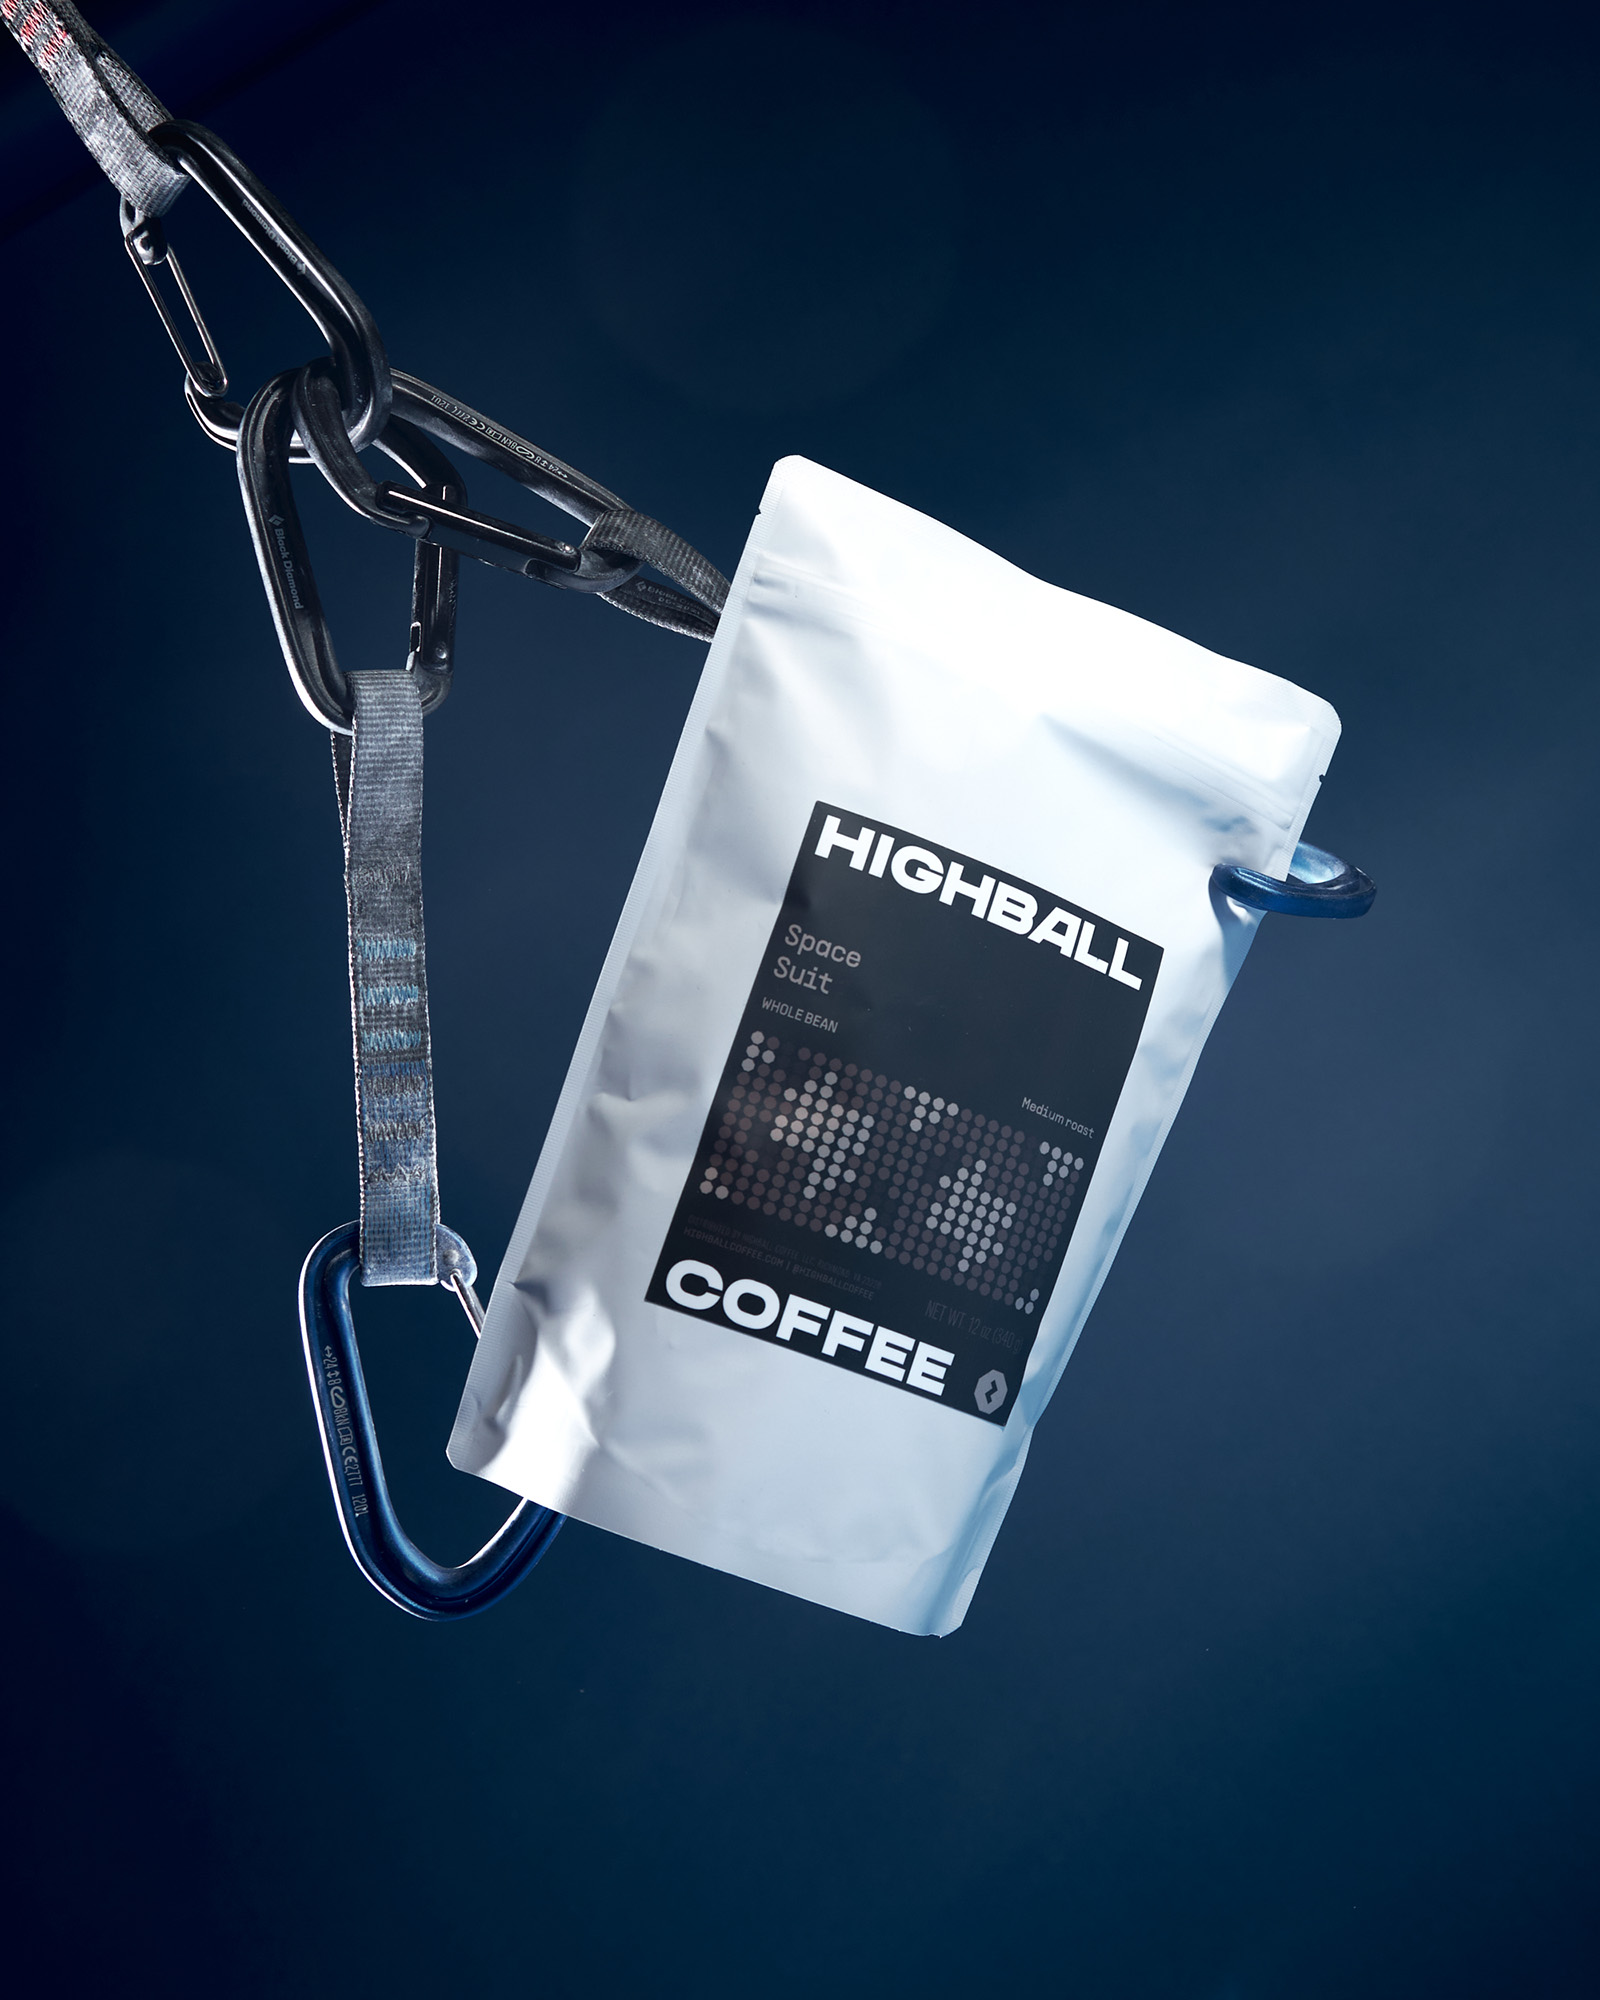 Highball Coffee Packaging Design